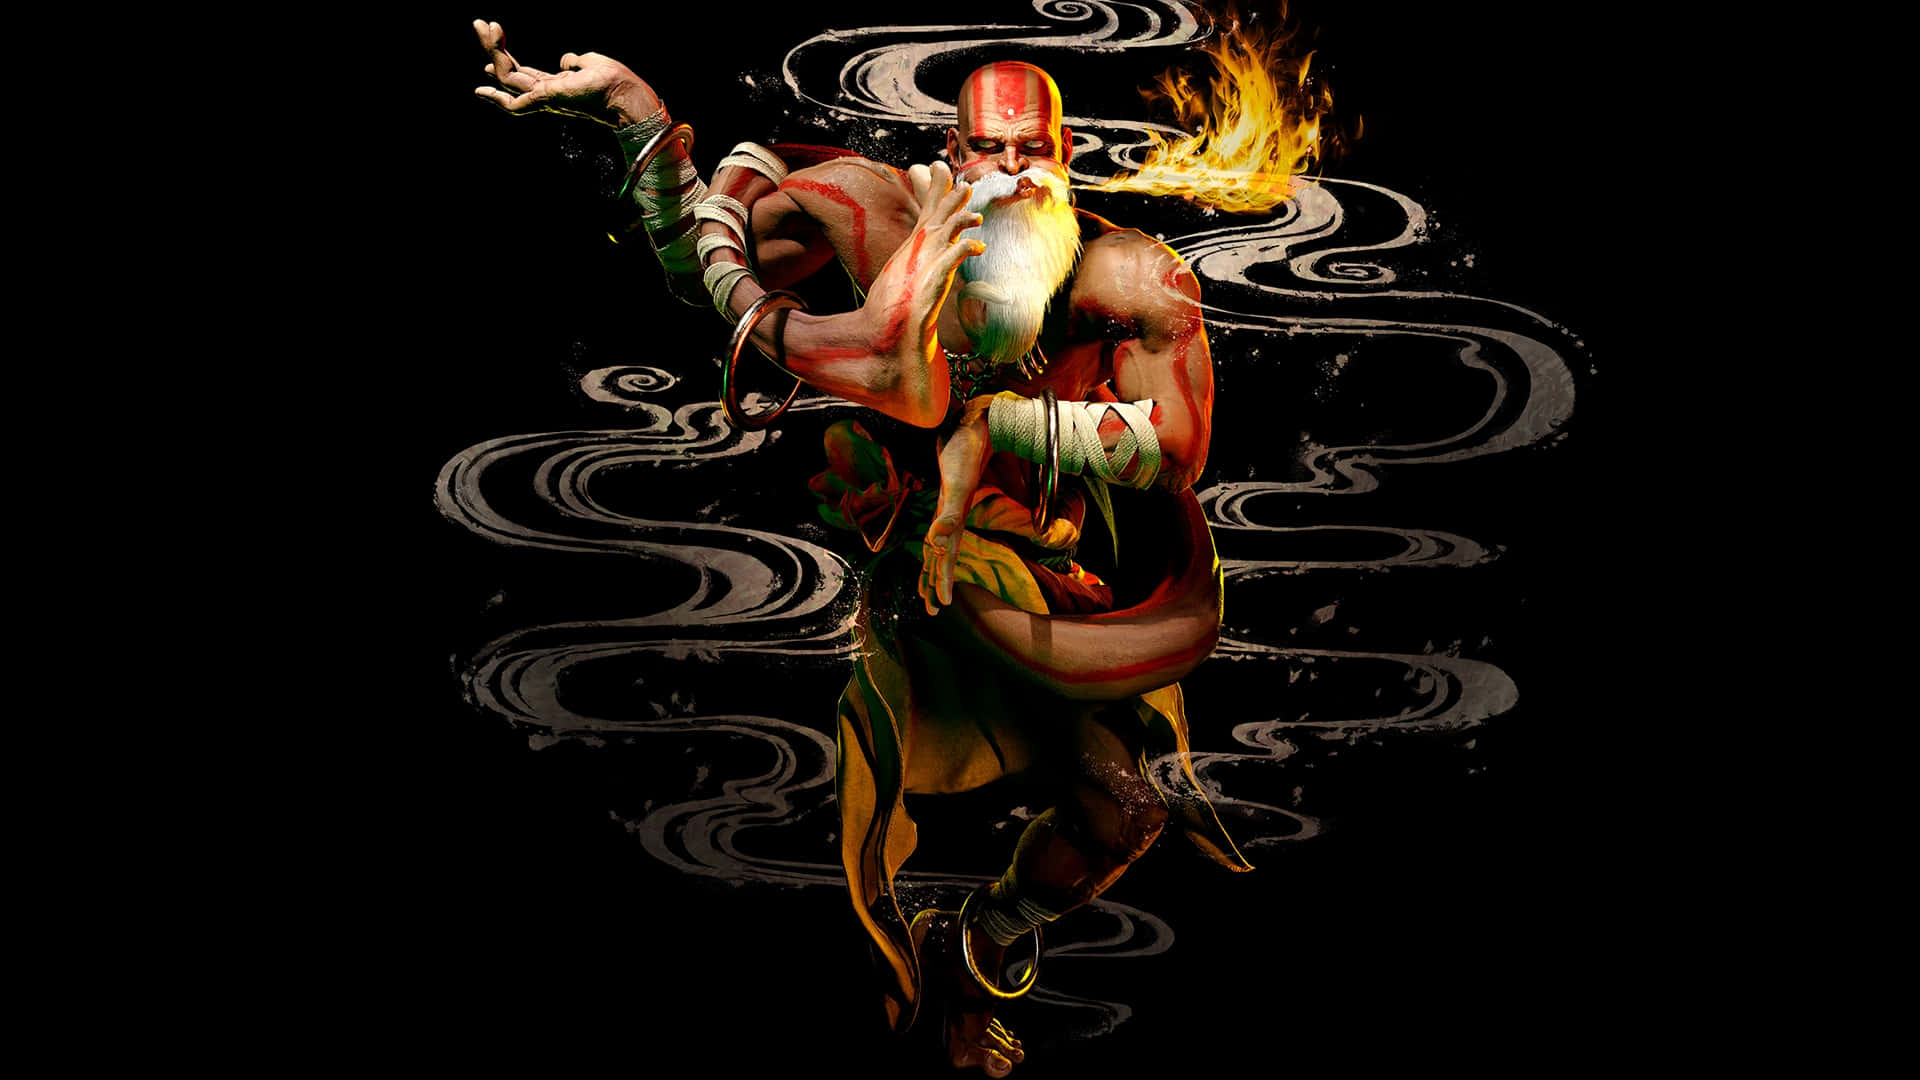 Street Fighter Dhalsim Fire Breath Wallpaper